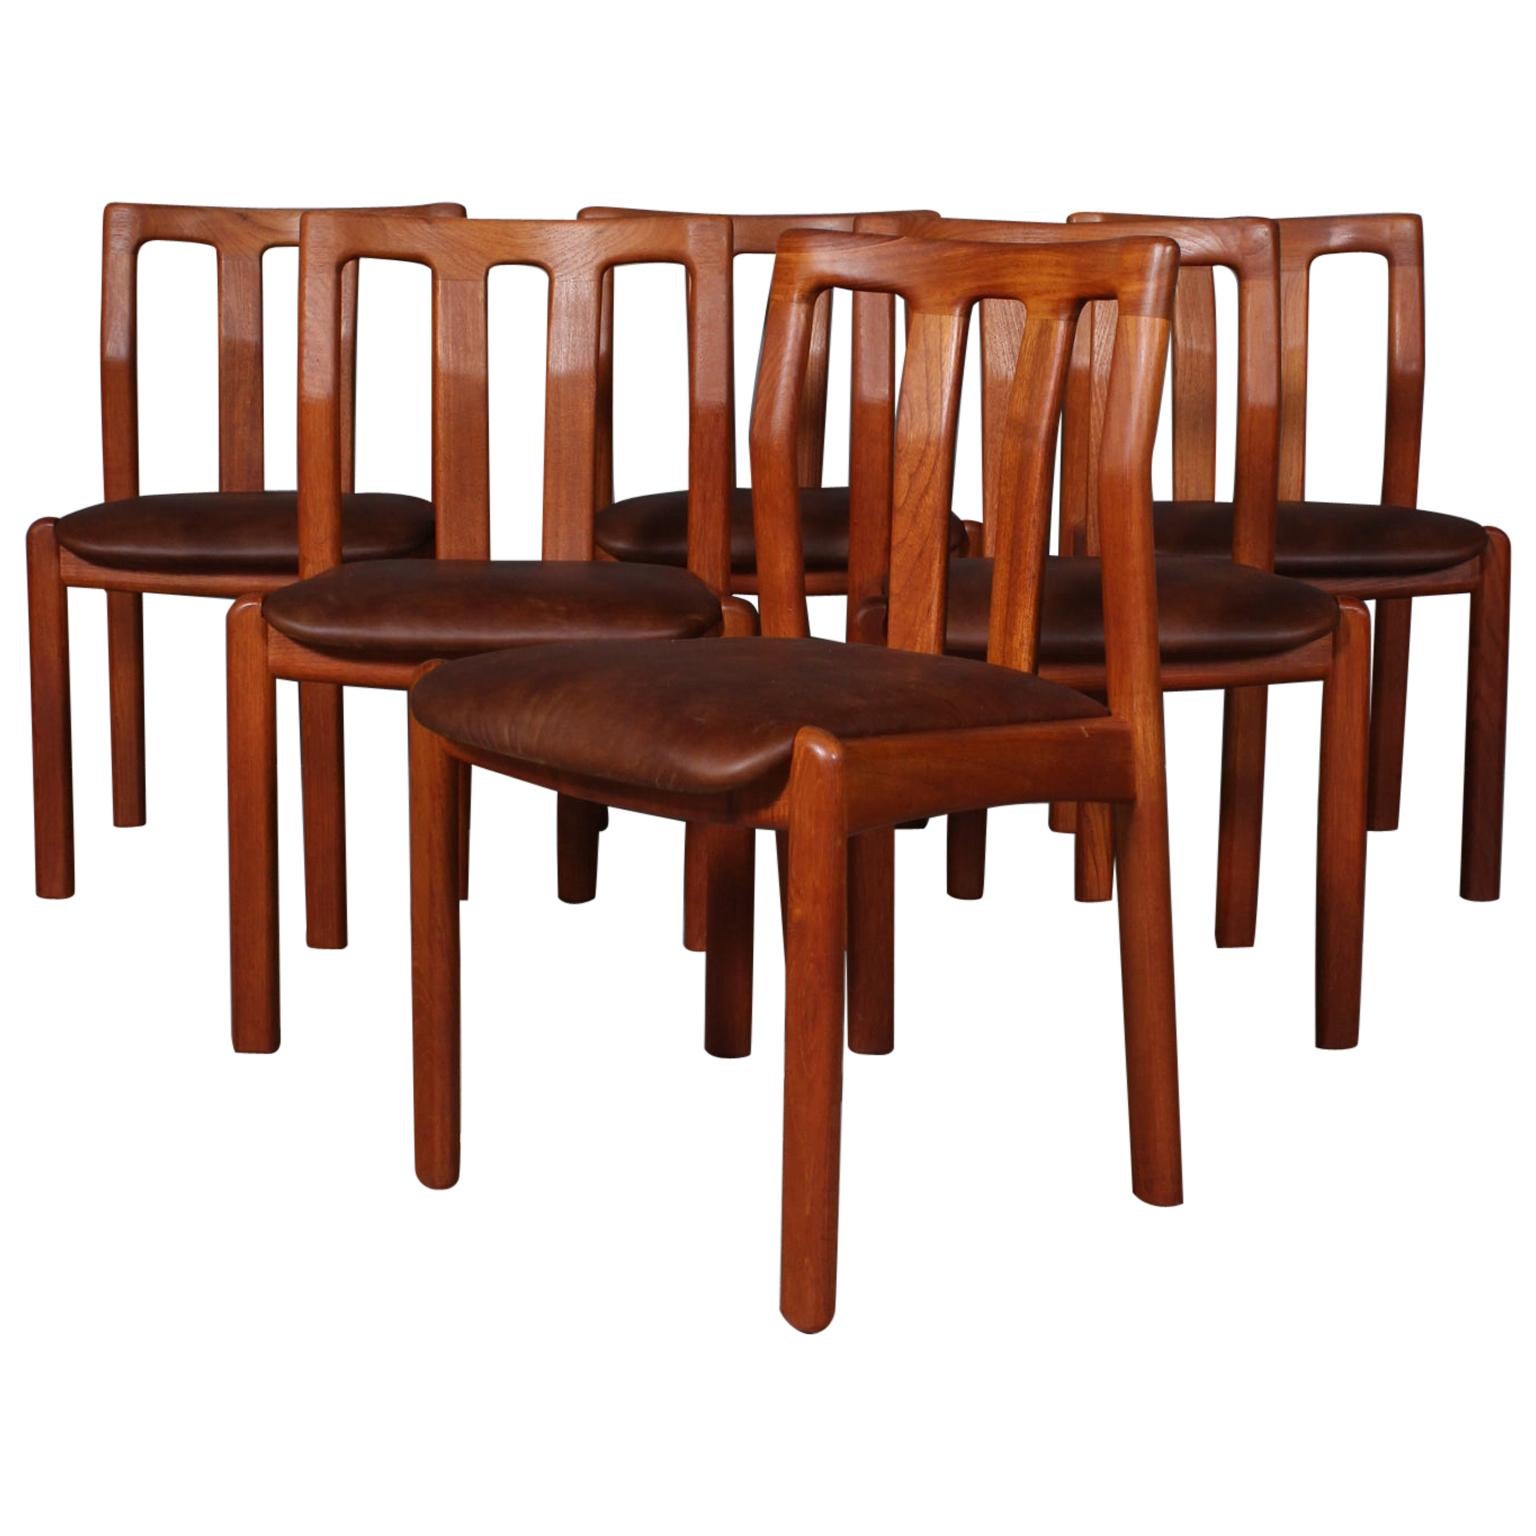 Dyrlund, Set of Six Dining Chairs, Teak